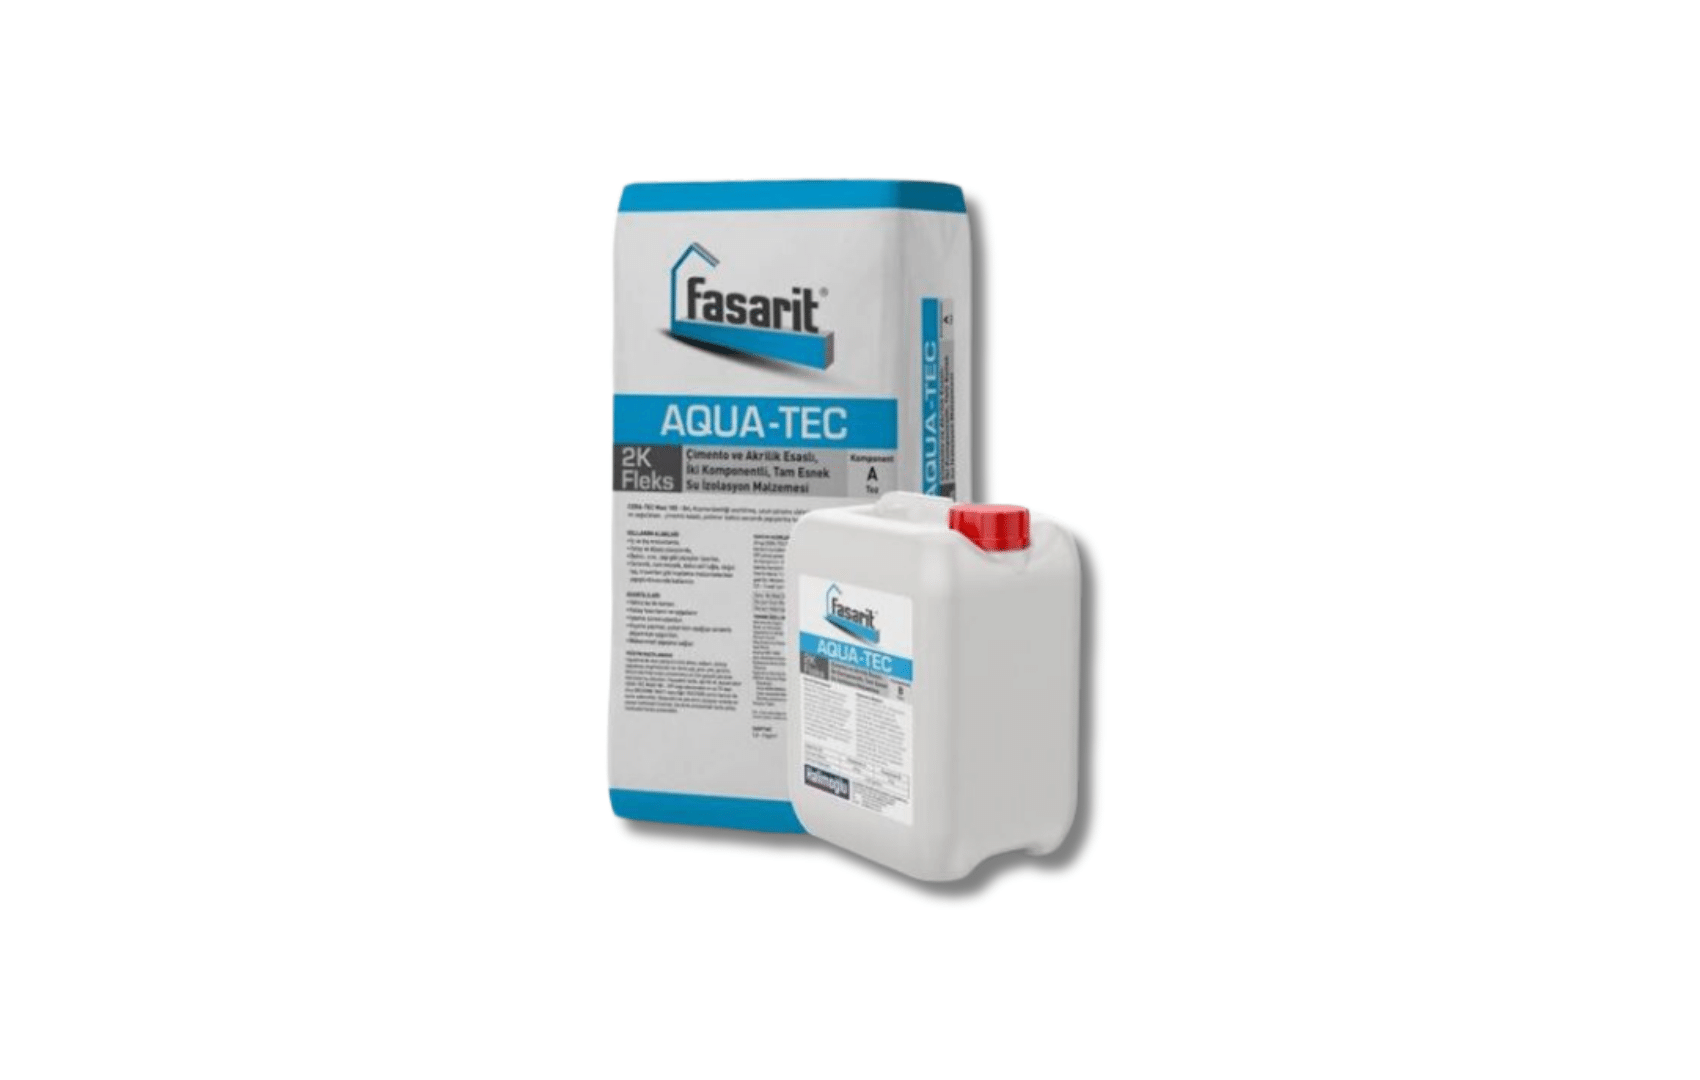 Aqua-Tec 2K Fleks Tam Elastik Su Yalıtım Malzemesi (20 kg + 10 kg) Set